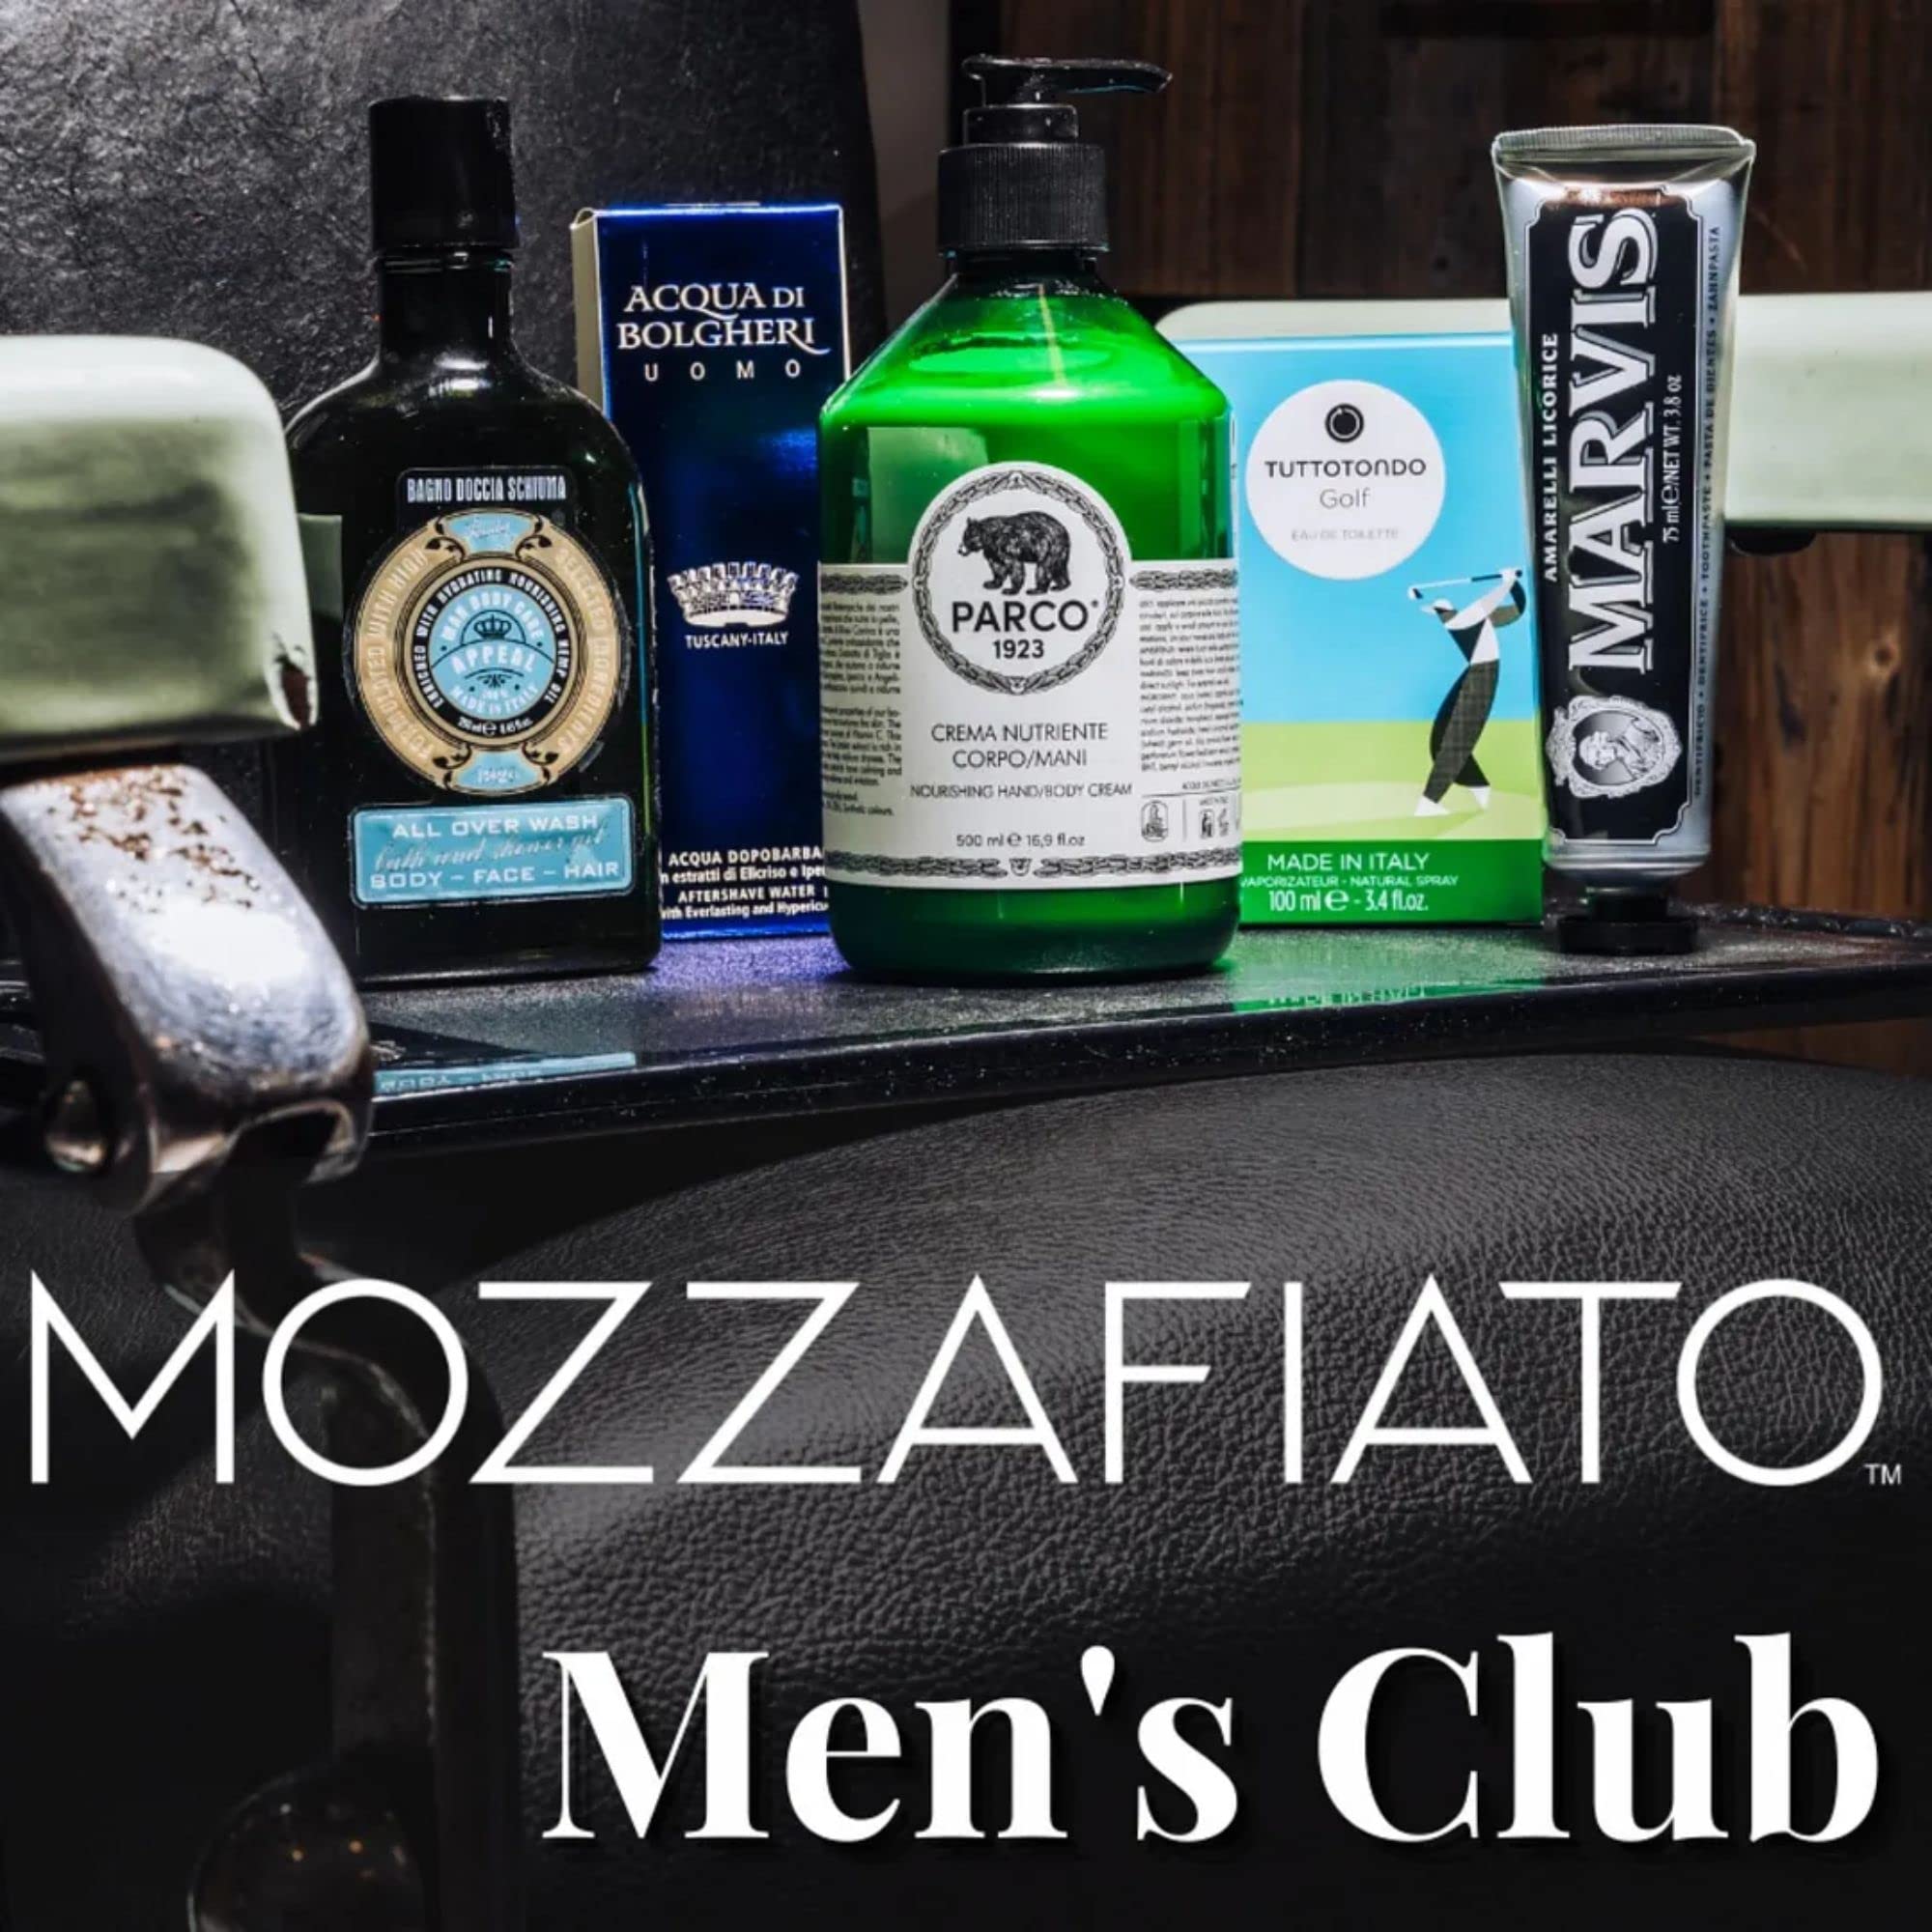 Mozzafiato Men's Club Monthly Subscription Box